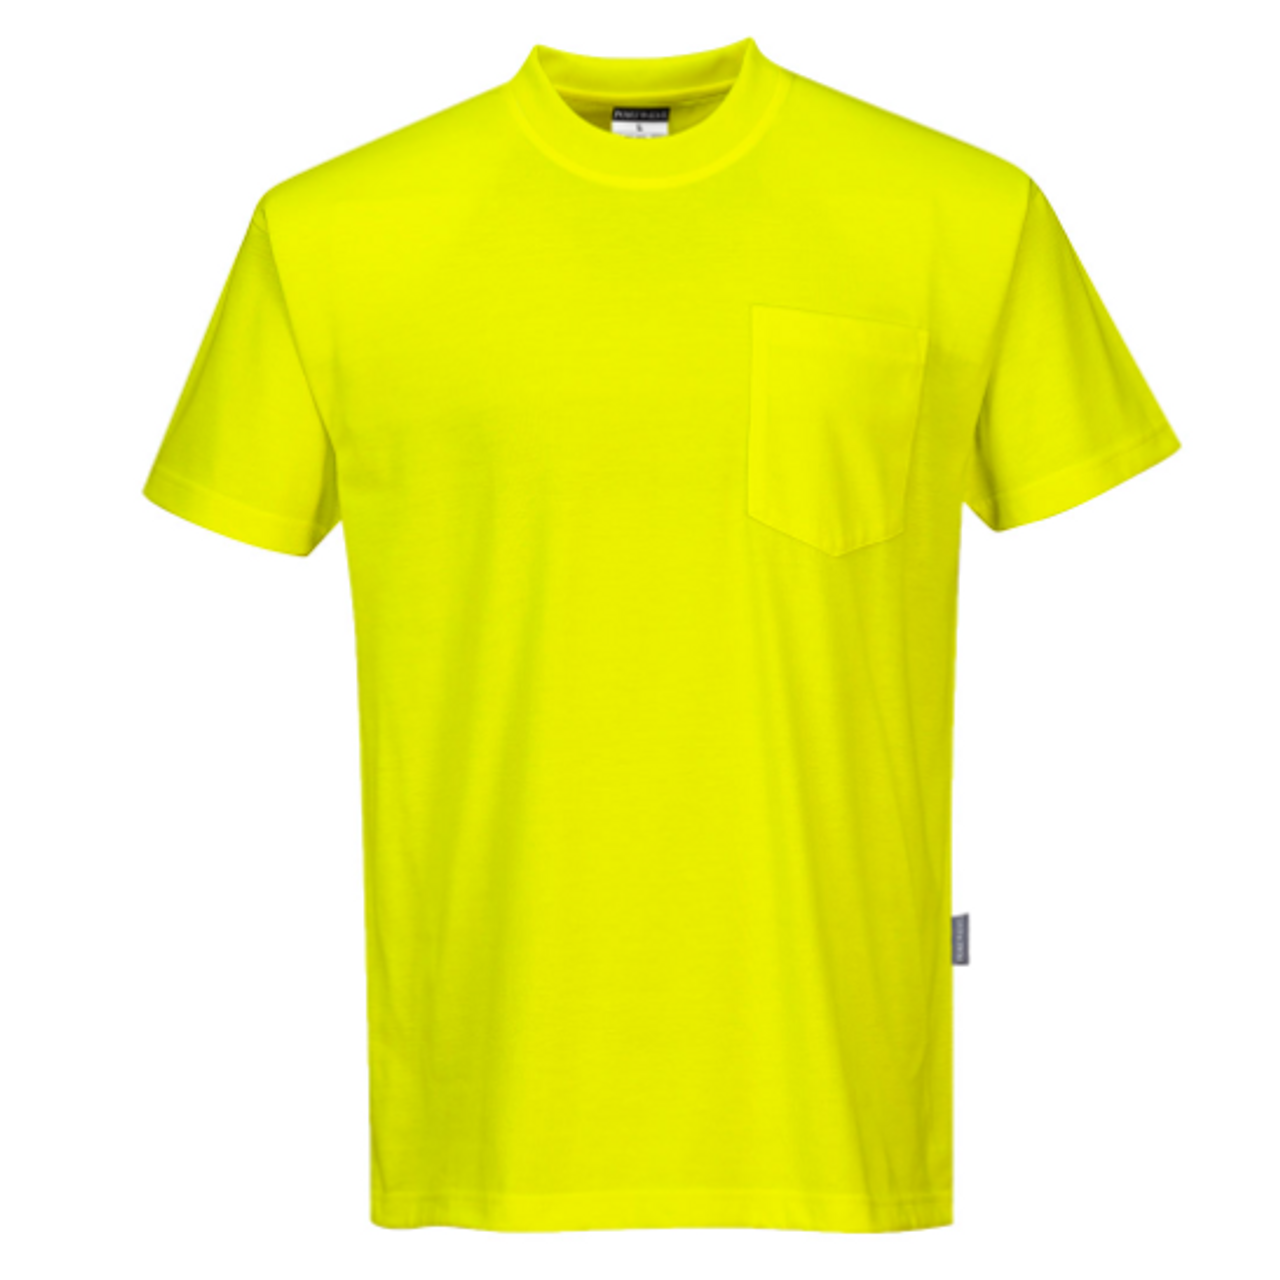 S577 - Camiseta de mezcla de algodón no ANSI, amarilla